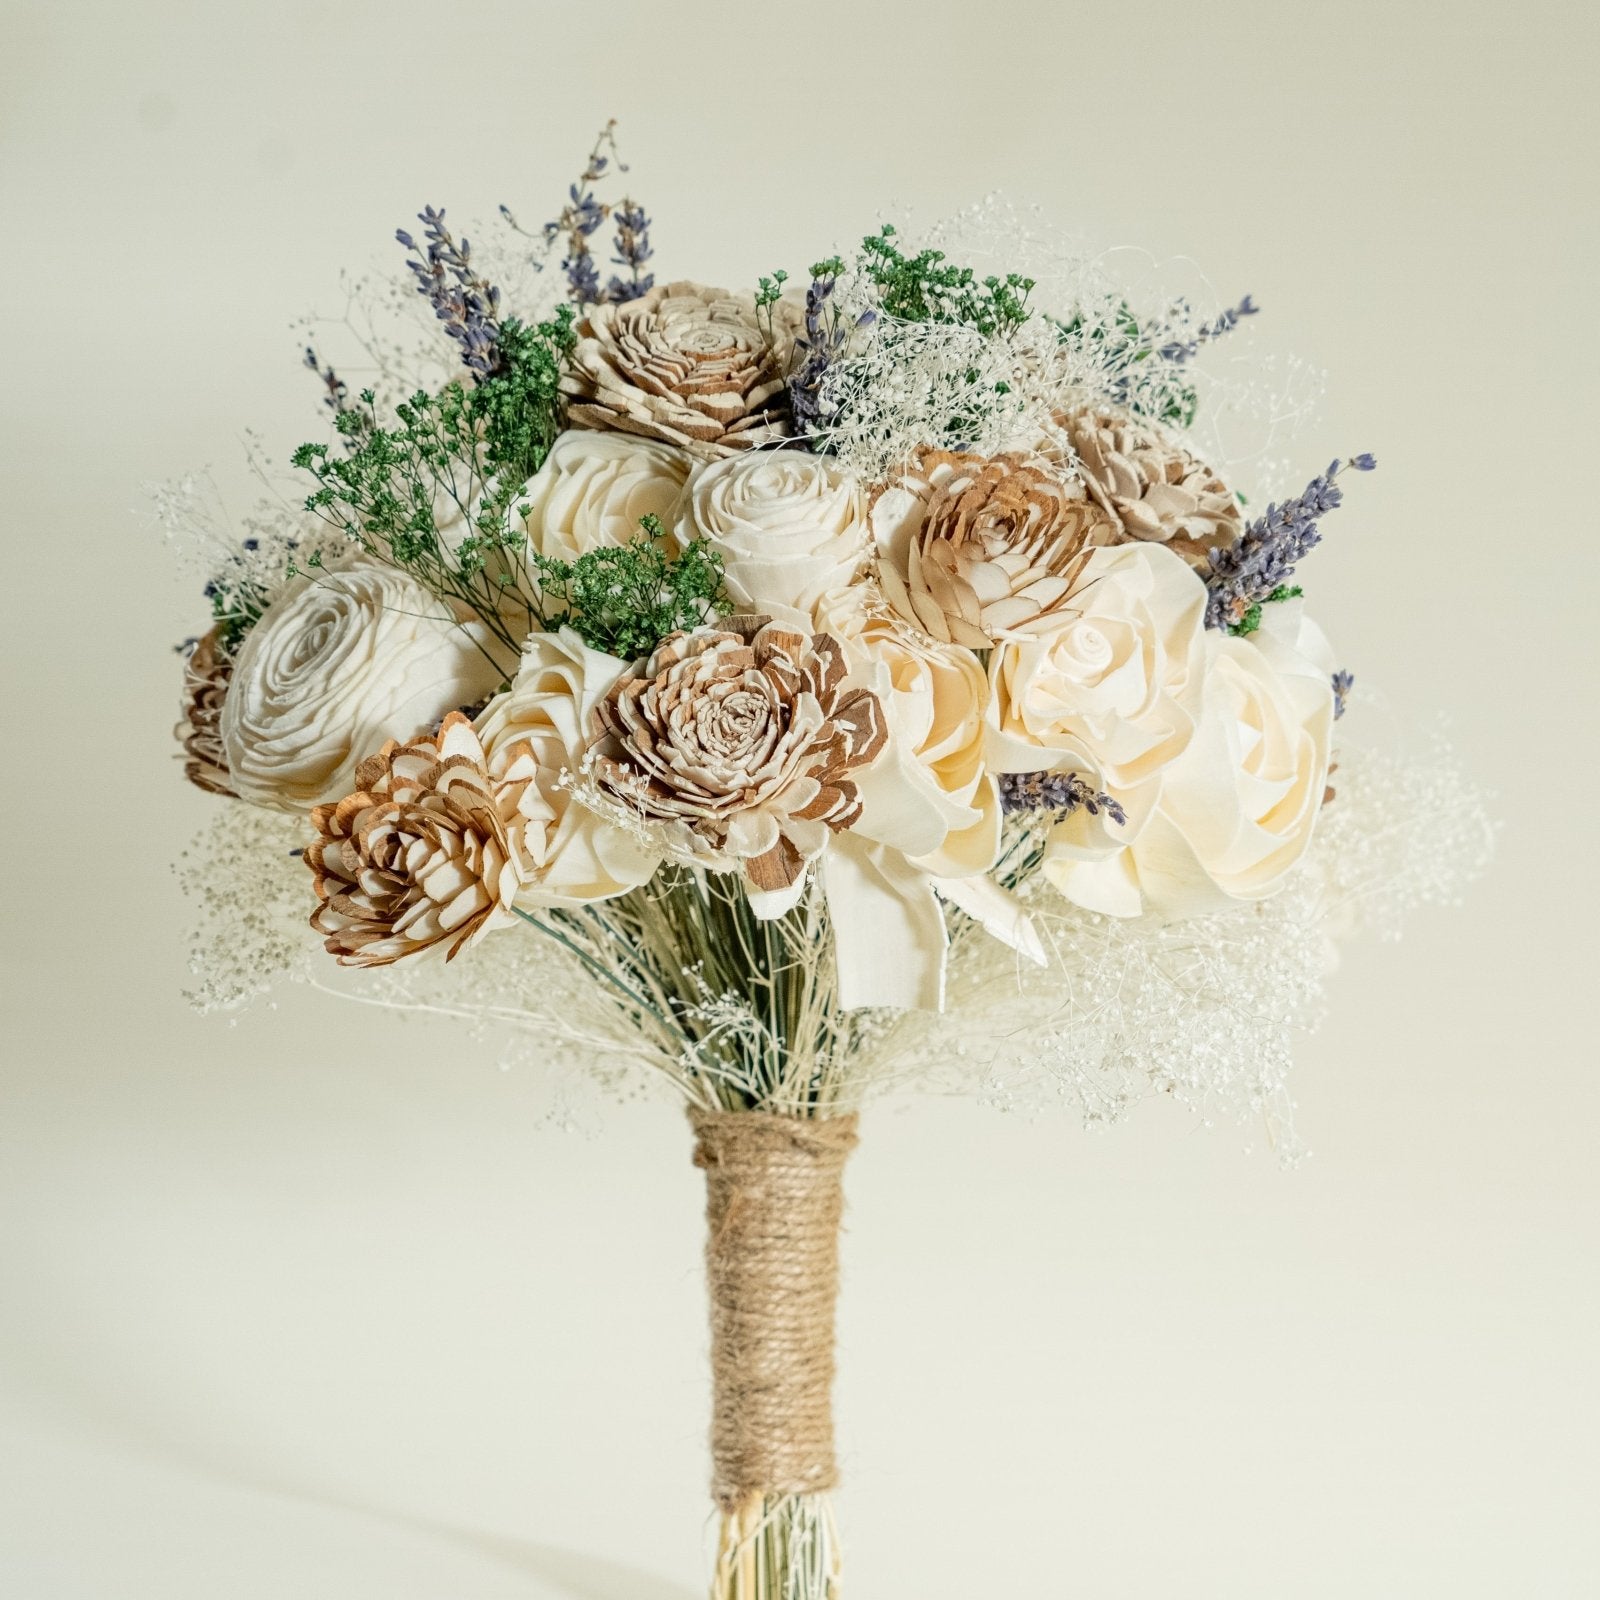 Black Gold Sola Wood Flowed Bridal Wedding Bouquet Accessories